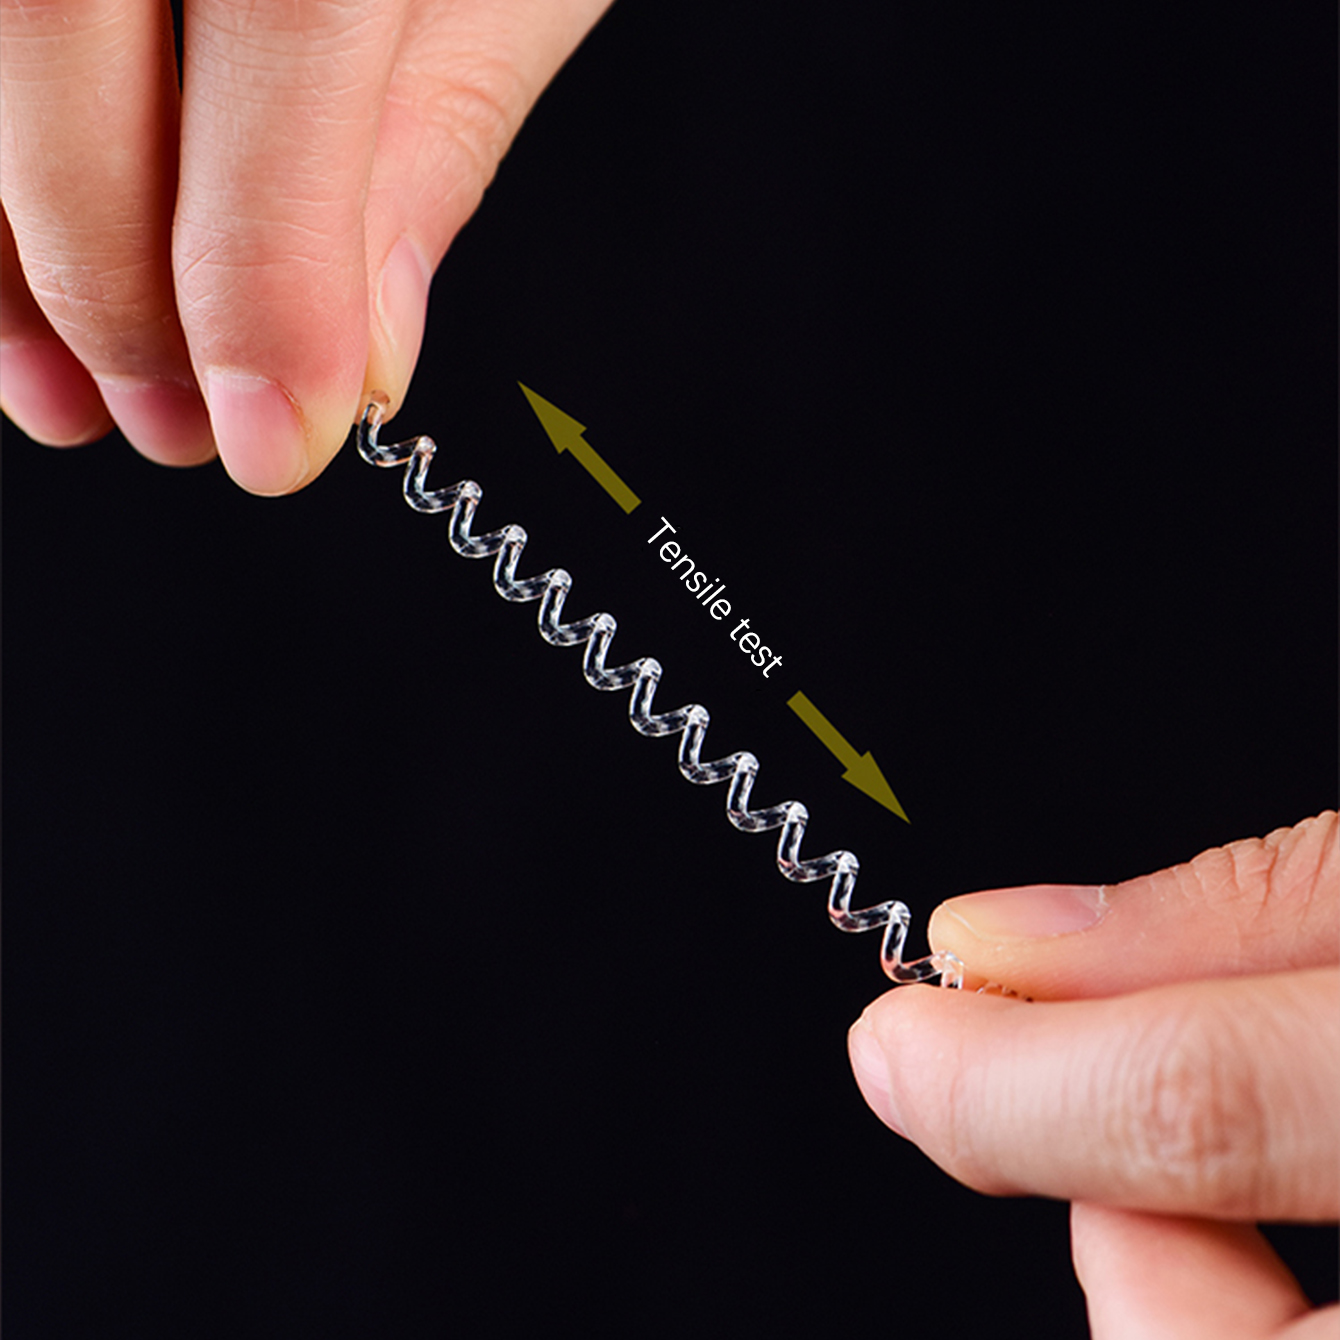 Transparent Silicone Ring Sizer For Women Adjustable Mandrel - Temu